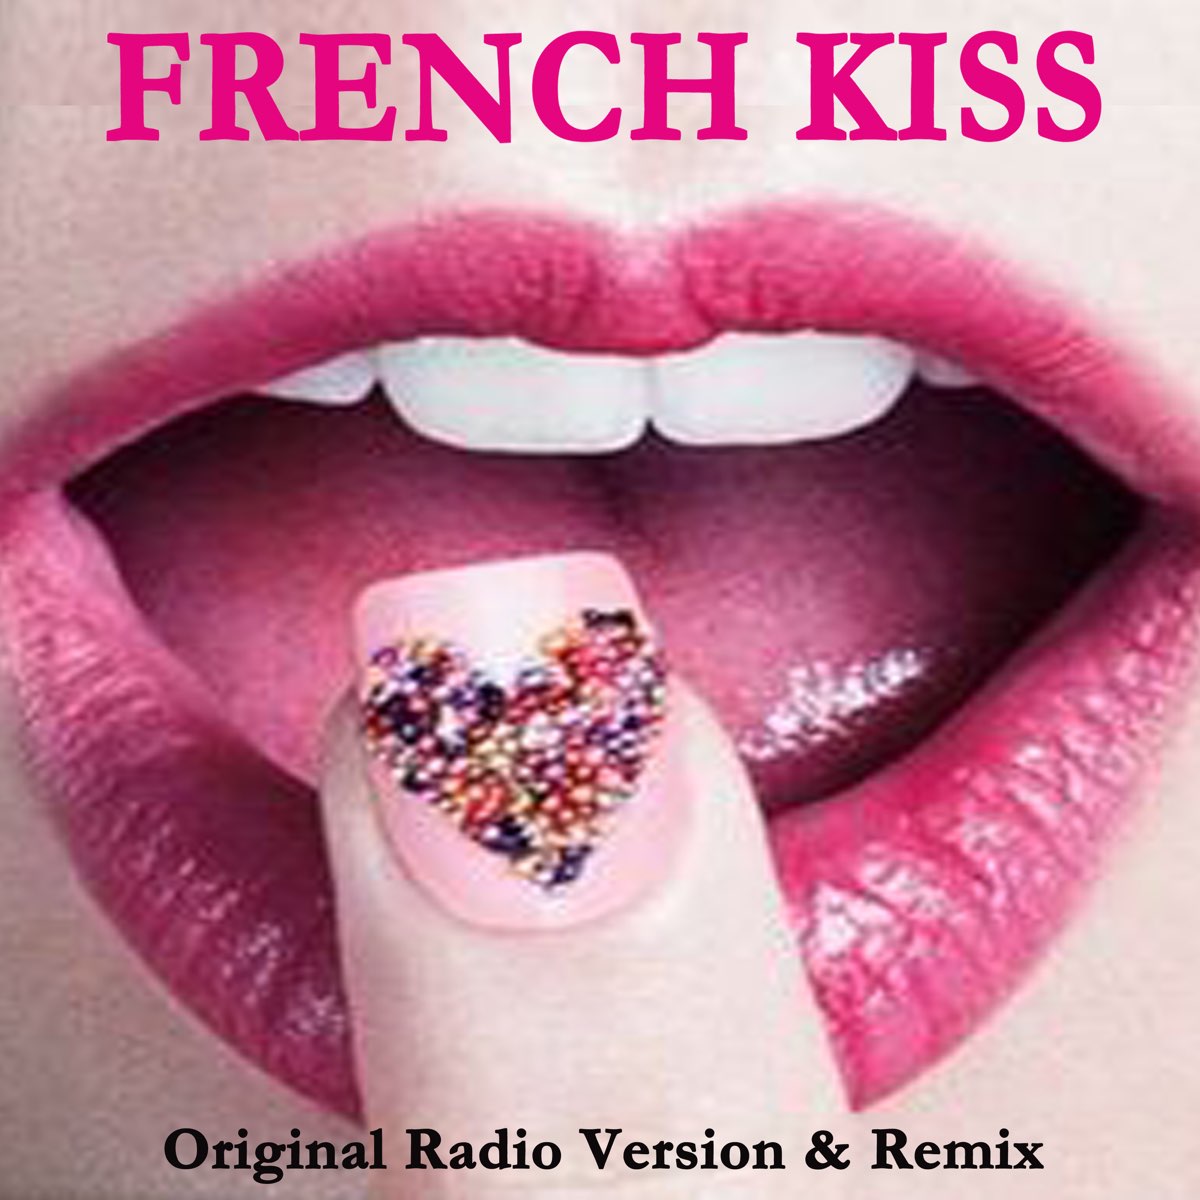 French remix